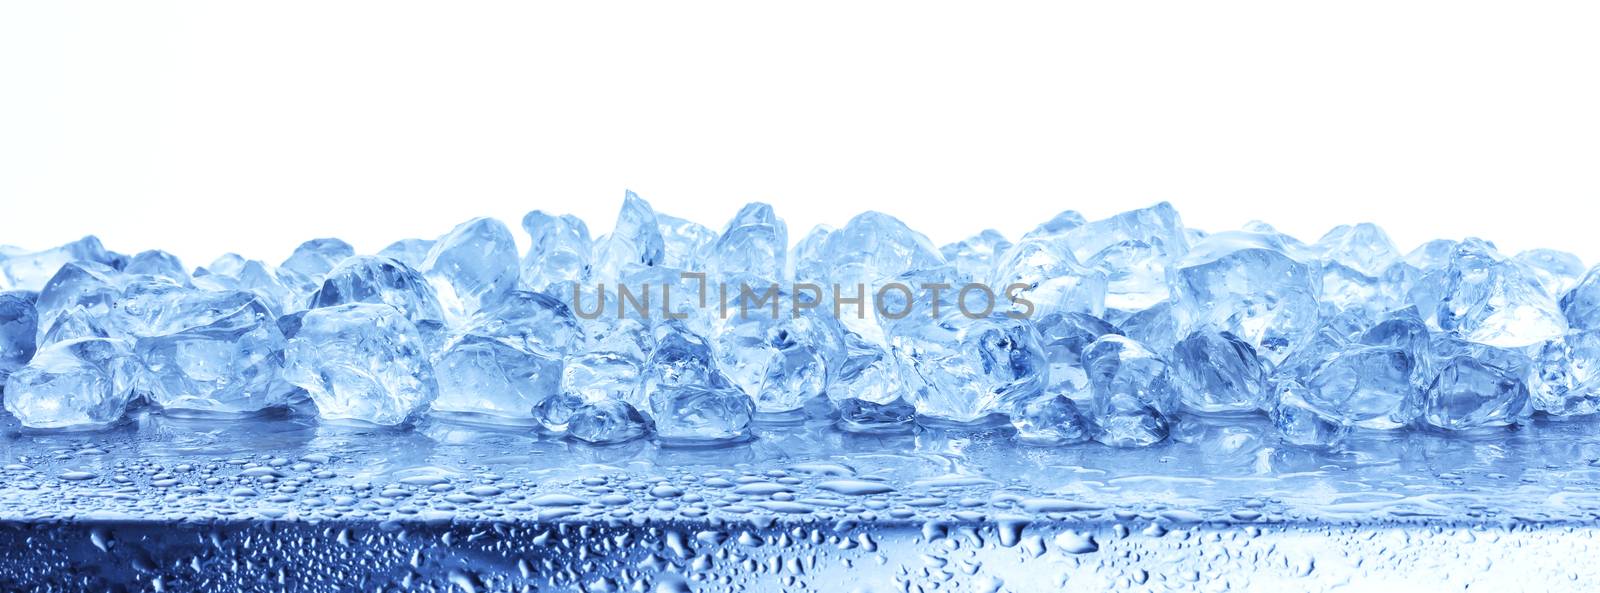 Heap of crushed ice isolated on white background by xamtiw